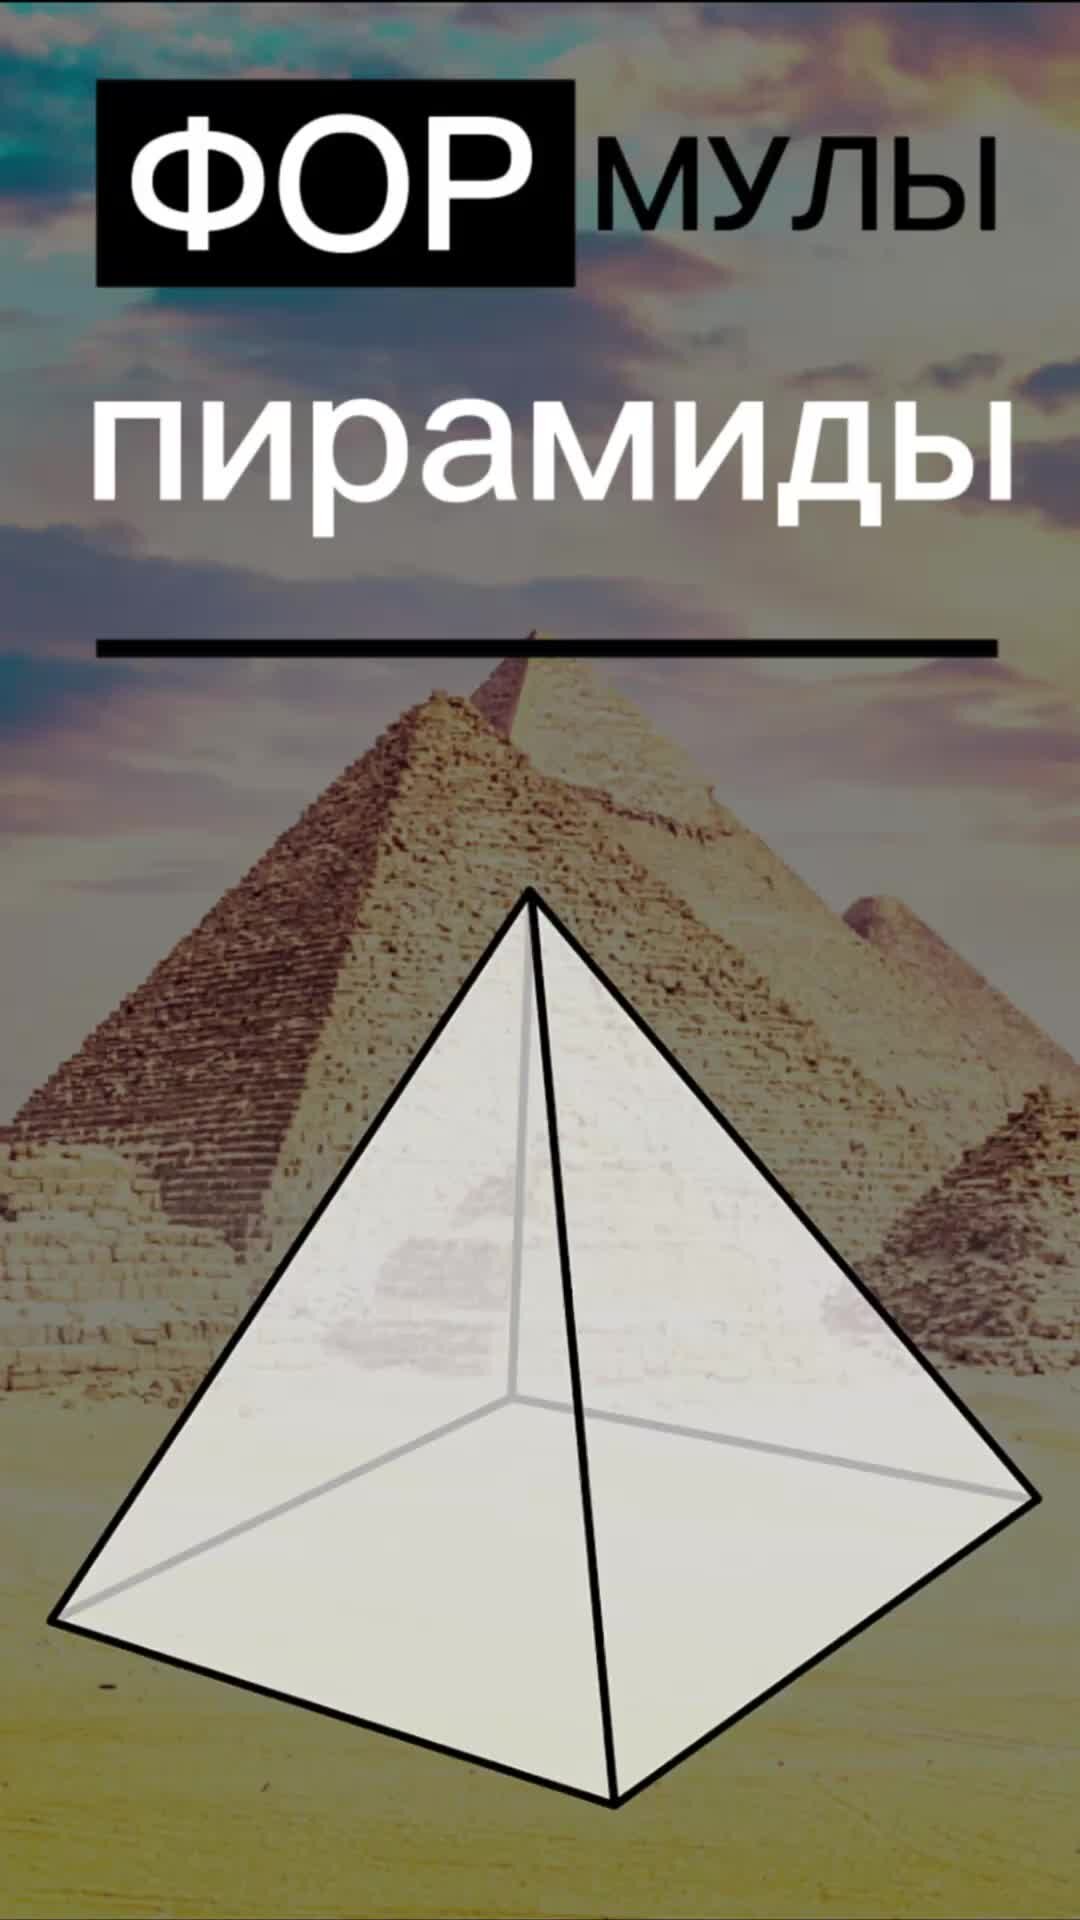 Формулы пирамиды геометрия 10